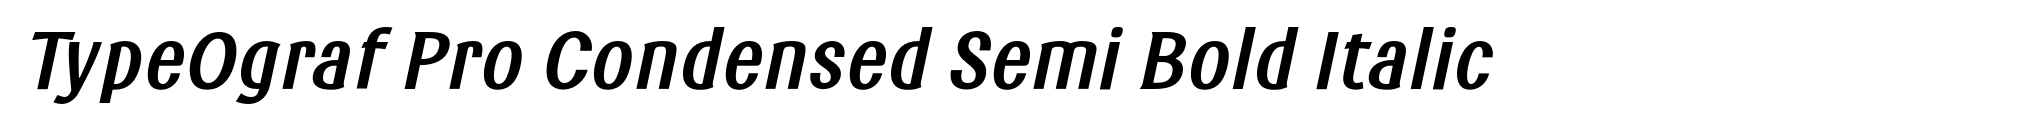 TypeOgraf Pro Condensed Semi Bold Italic image